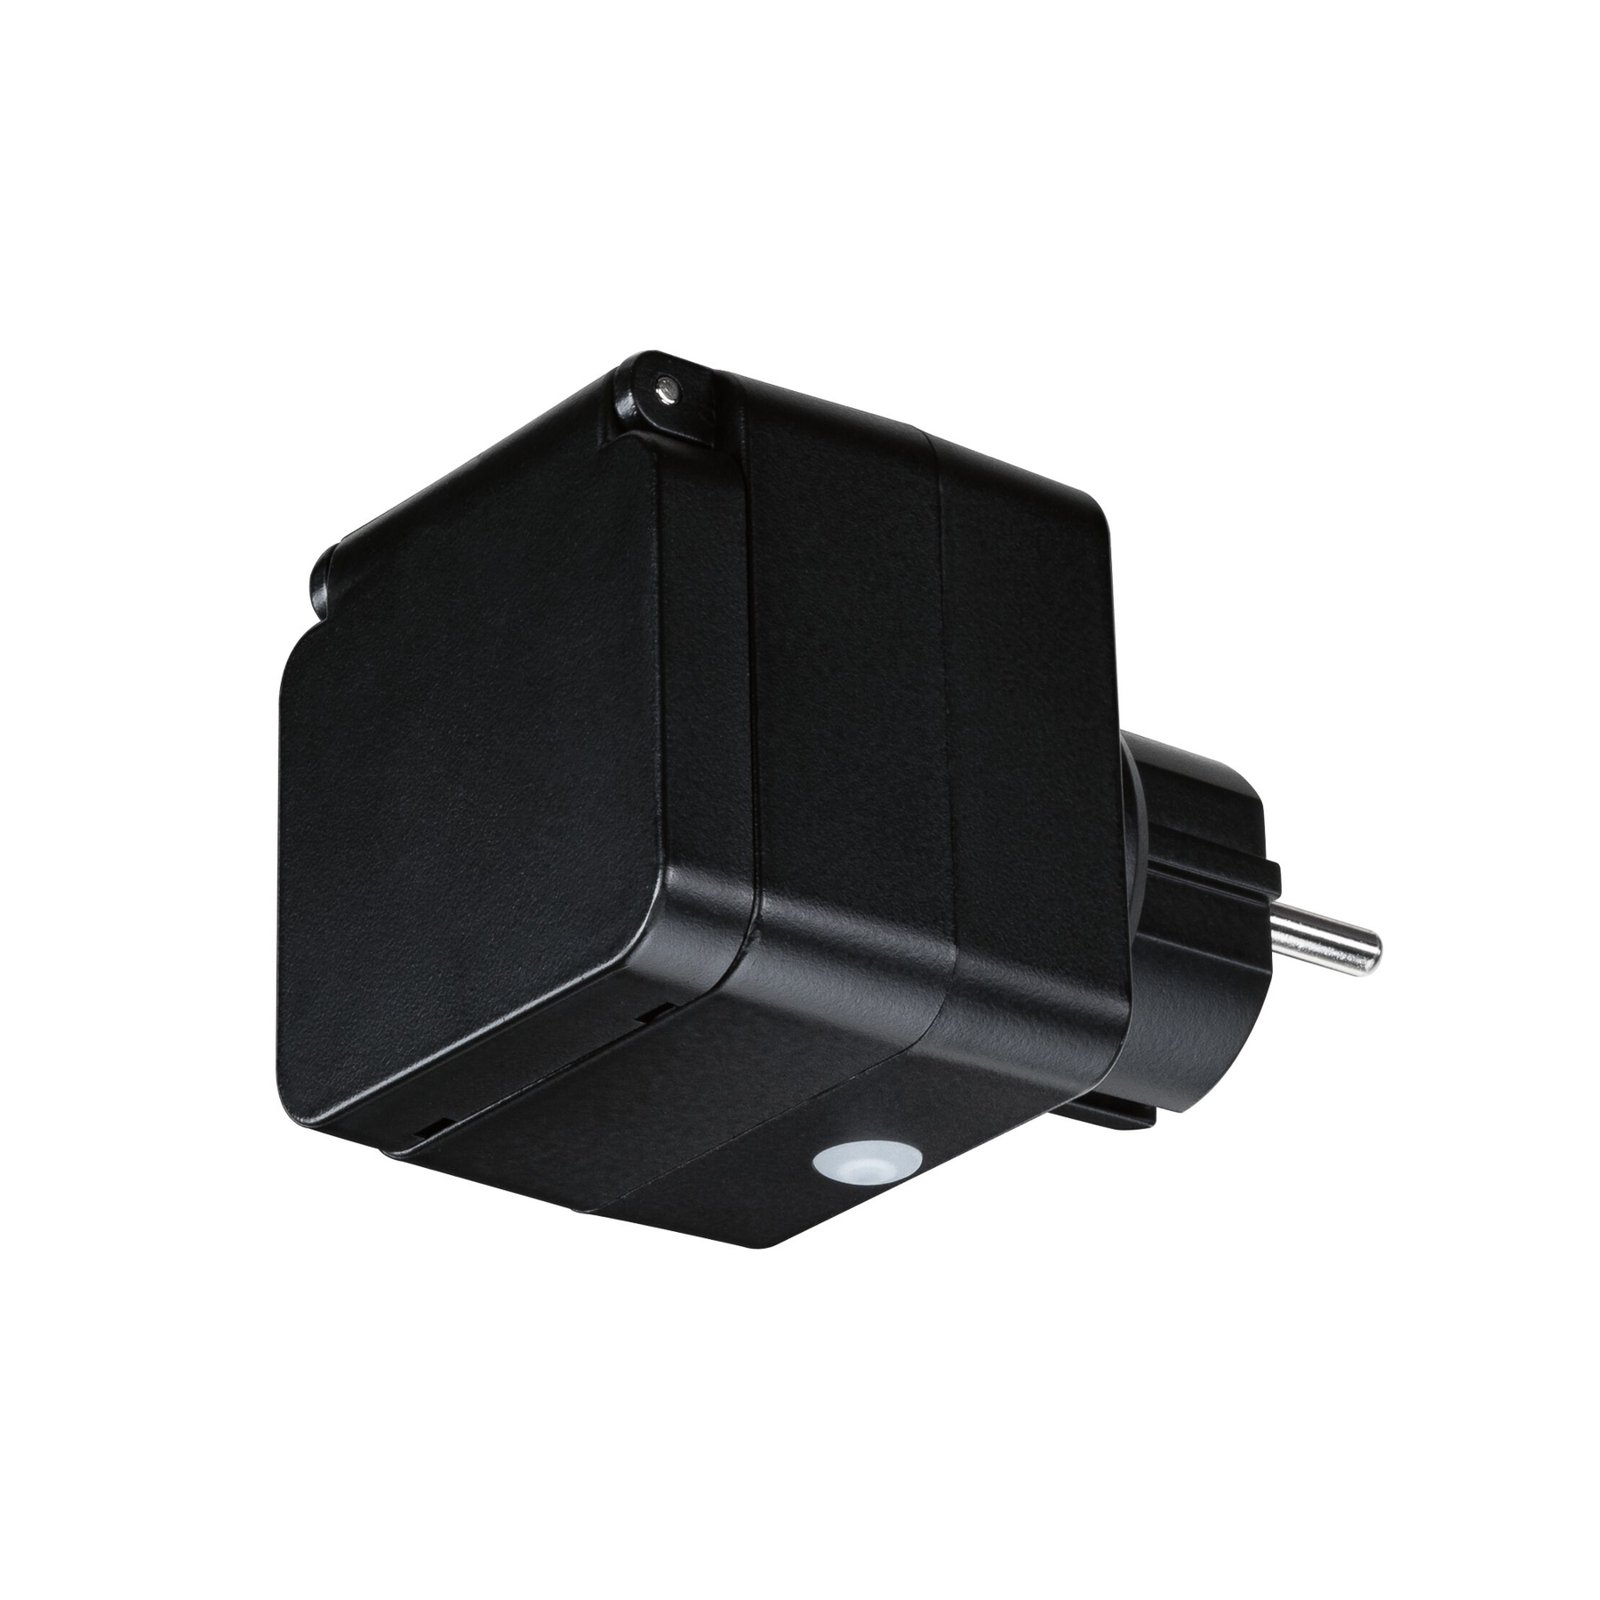 Paulmann Smart Plug Outdoor ZigBee adapterstekker